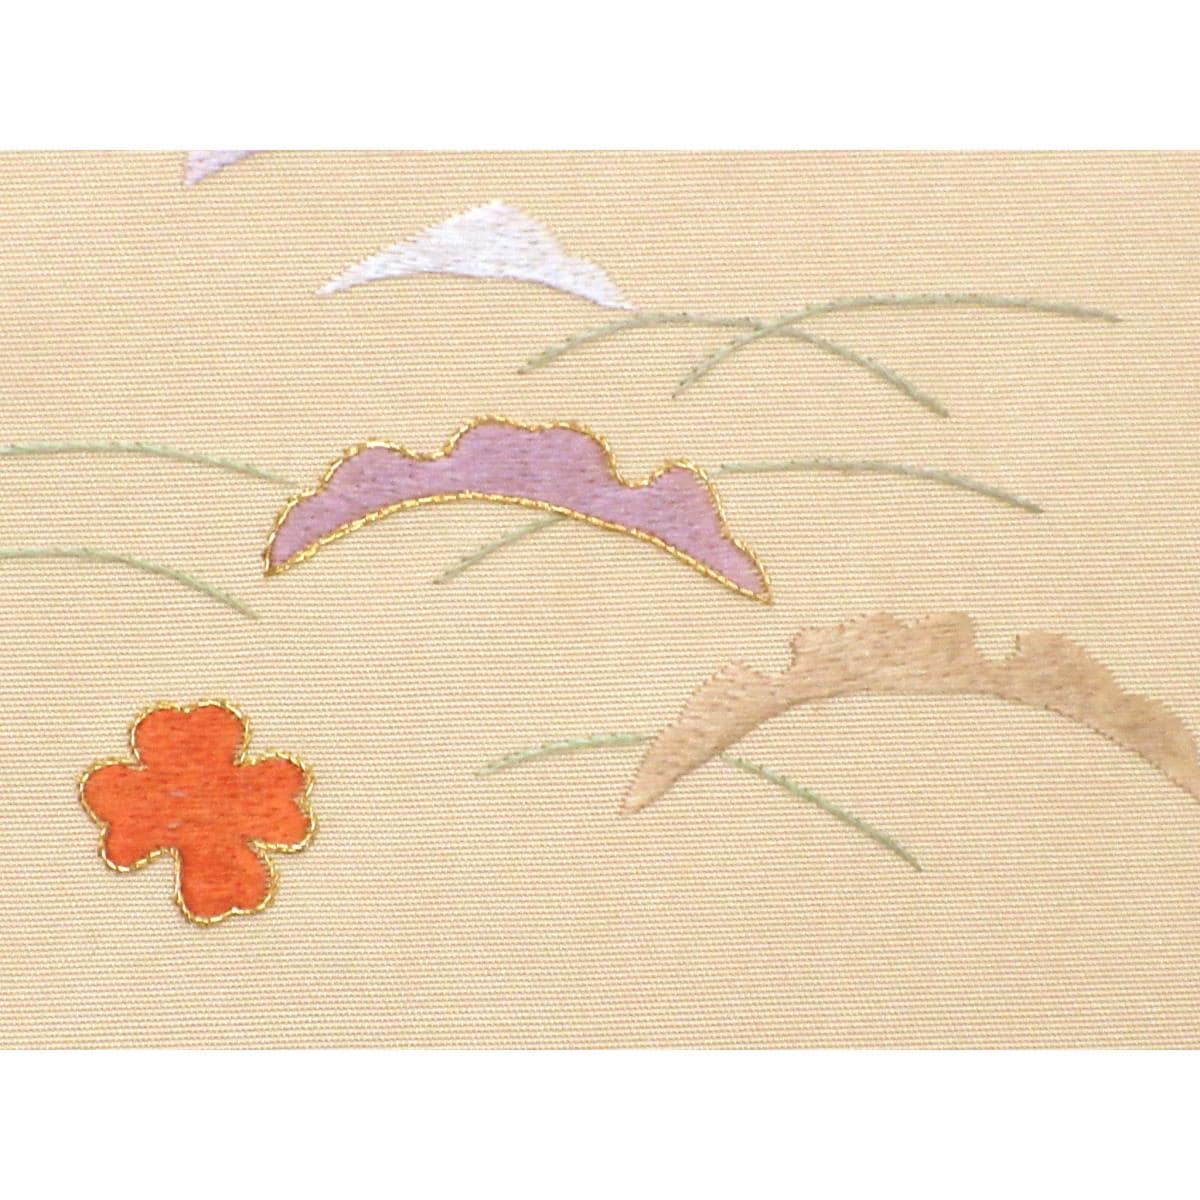 Nagoya obi embroidery processing